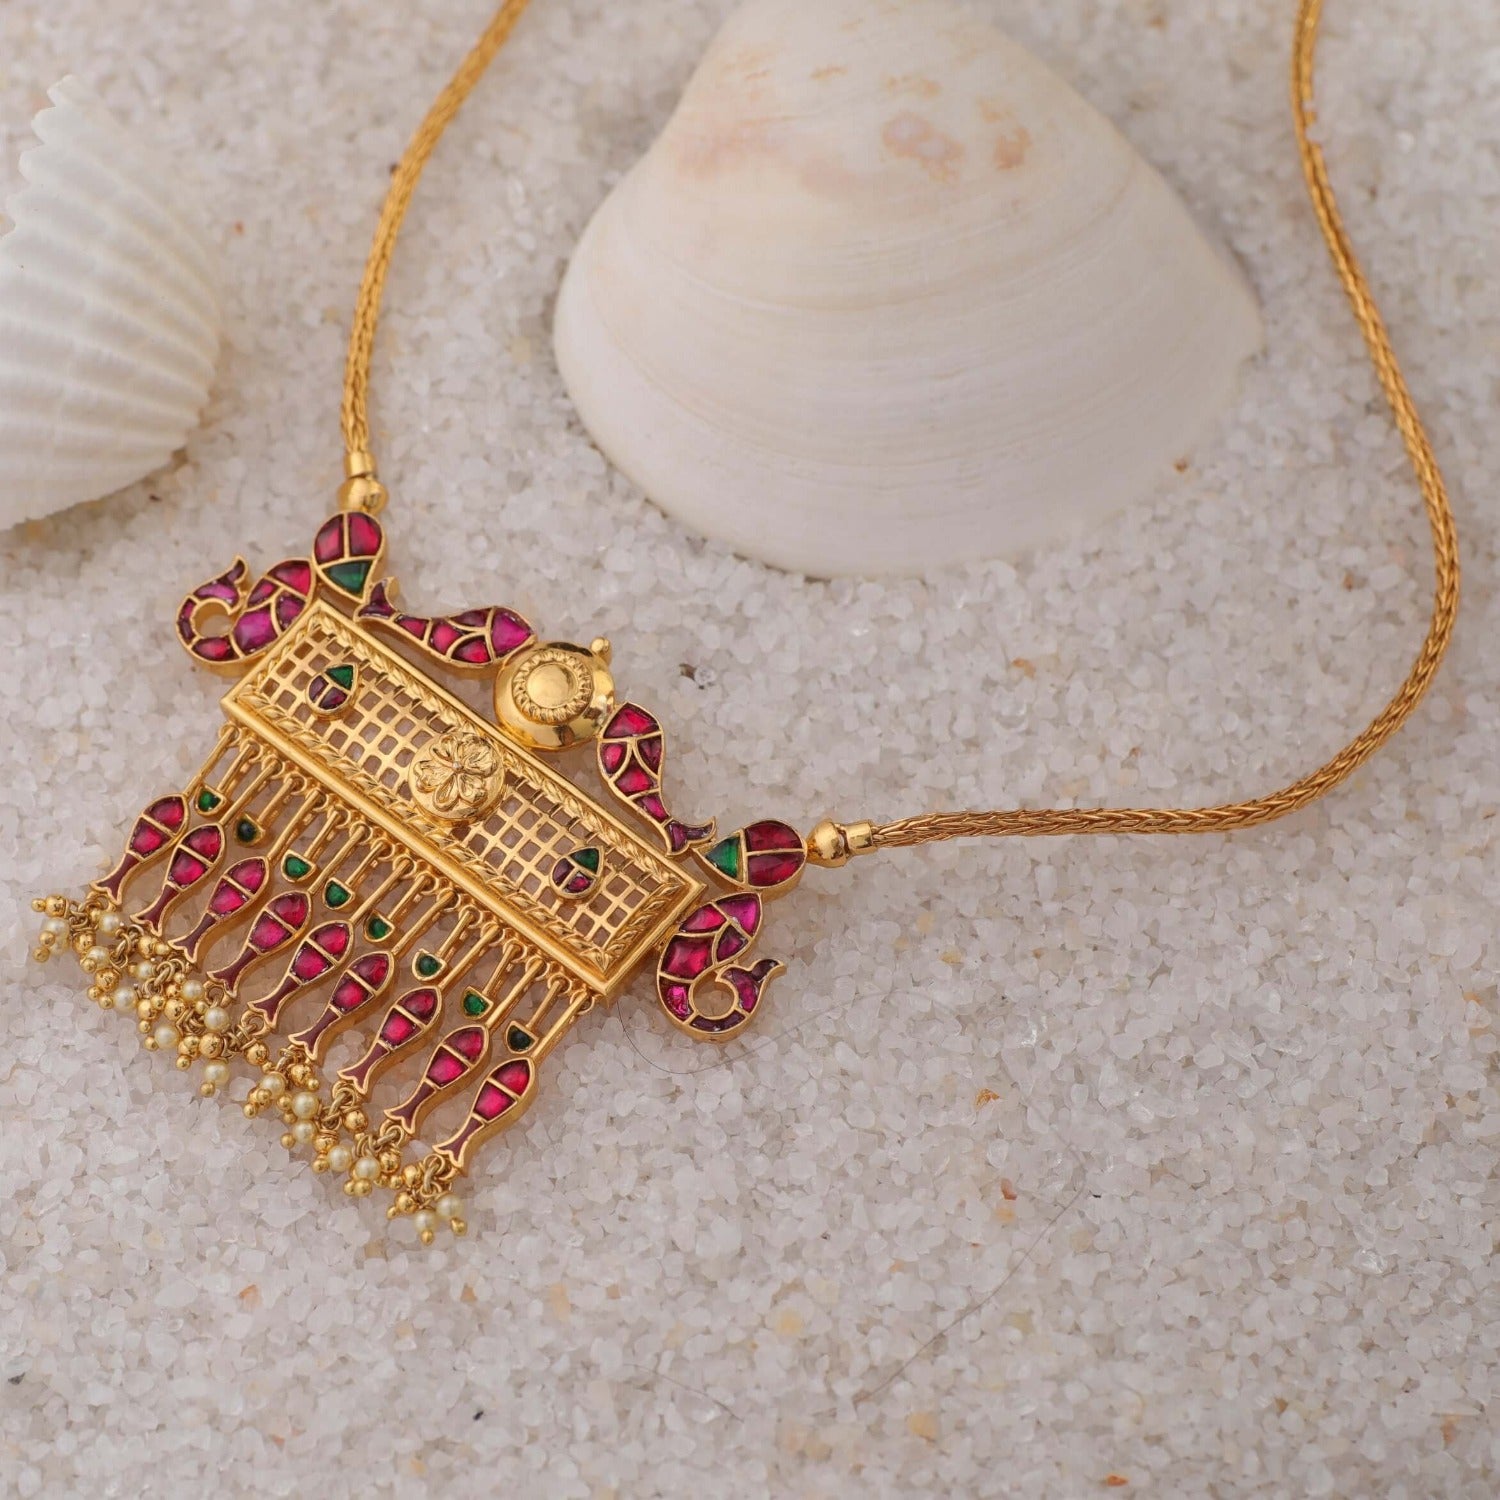 Rita Stone Pendant Necklace in Berry | Pendant necklace, Stone pendant  necklace, Long necklace